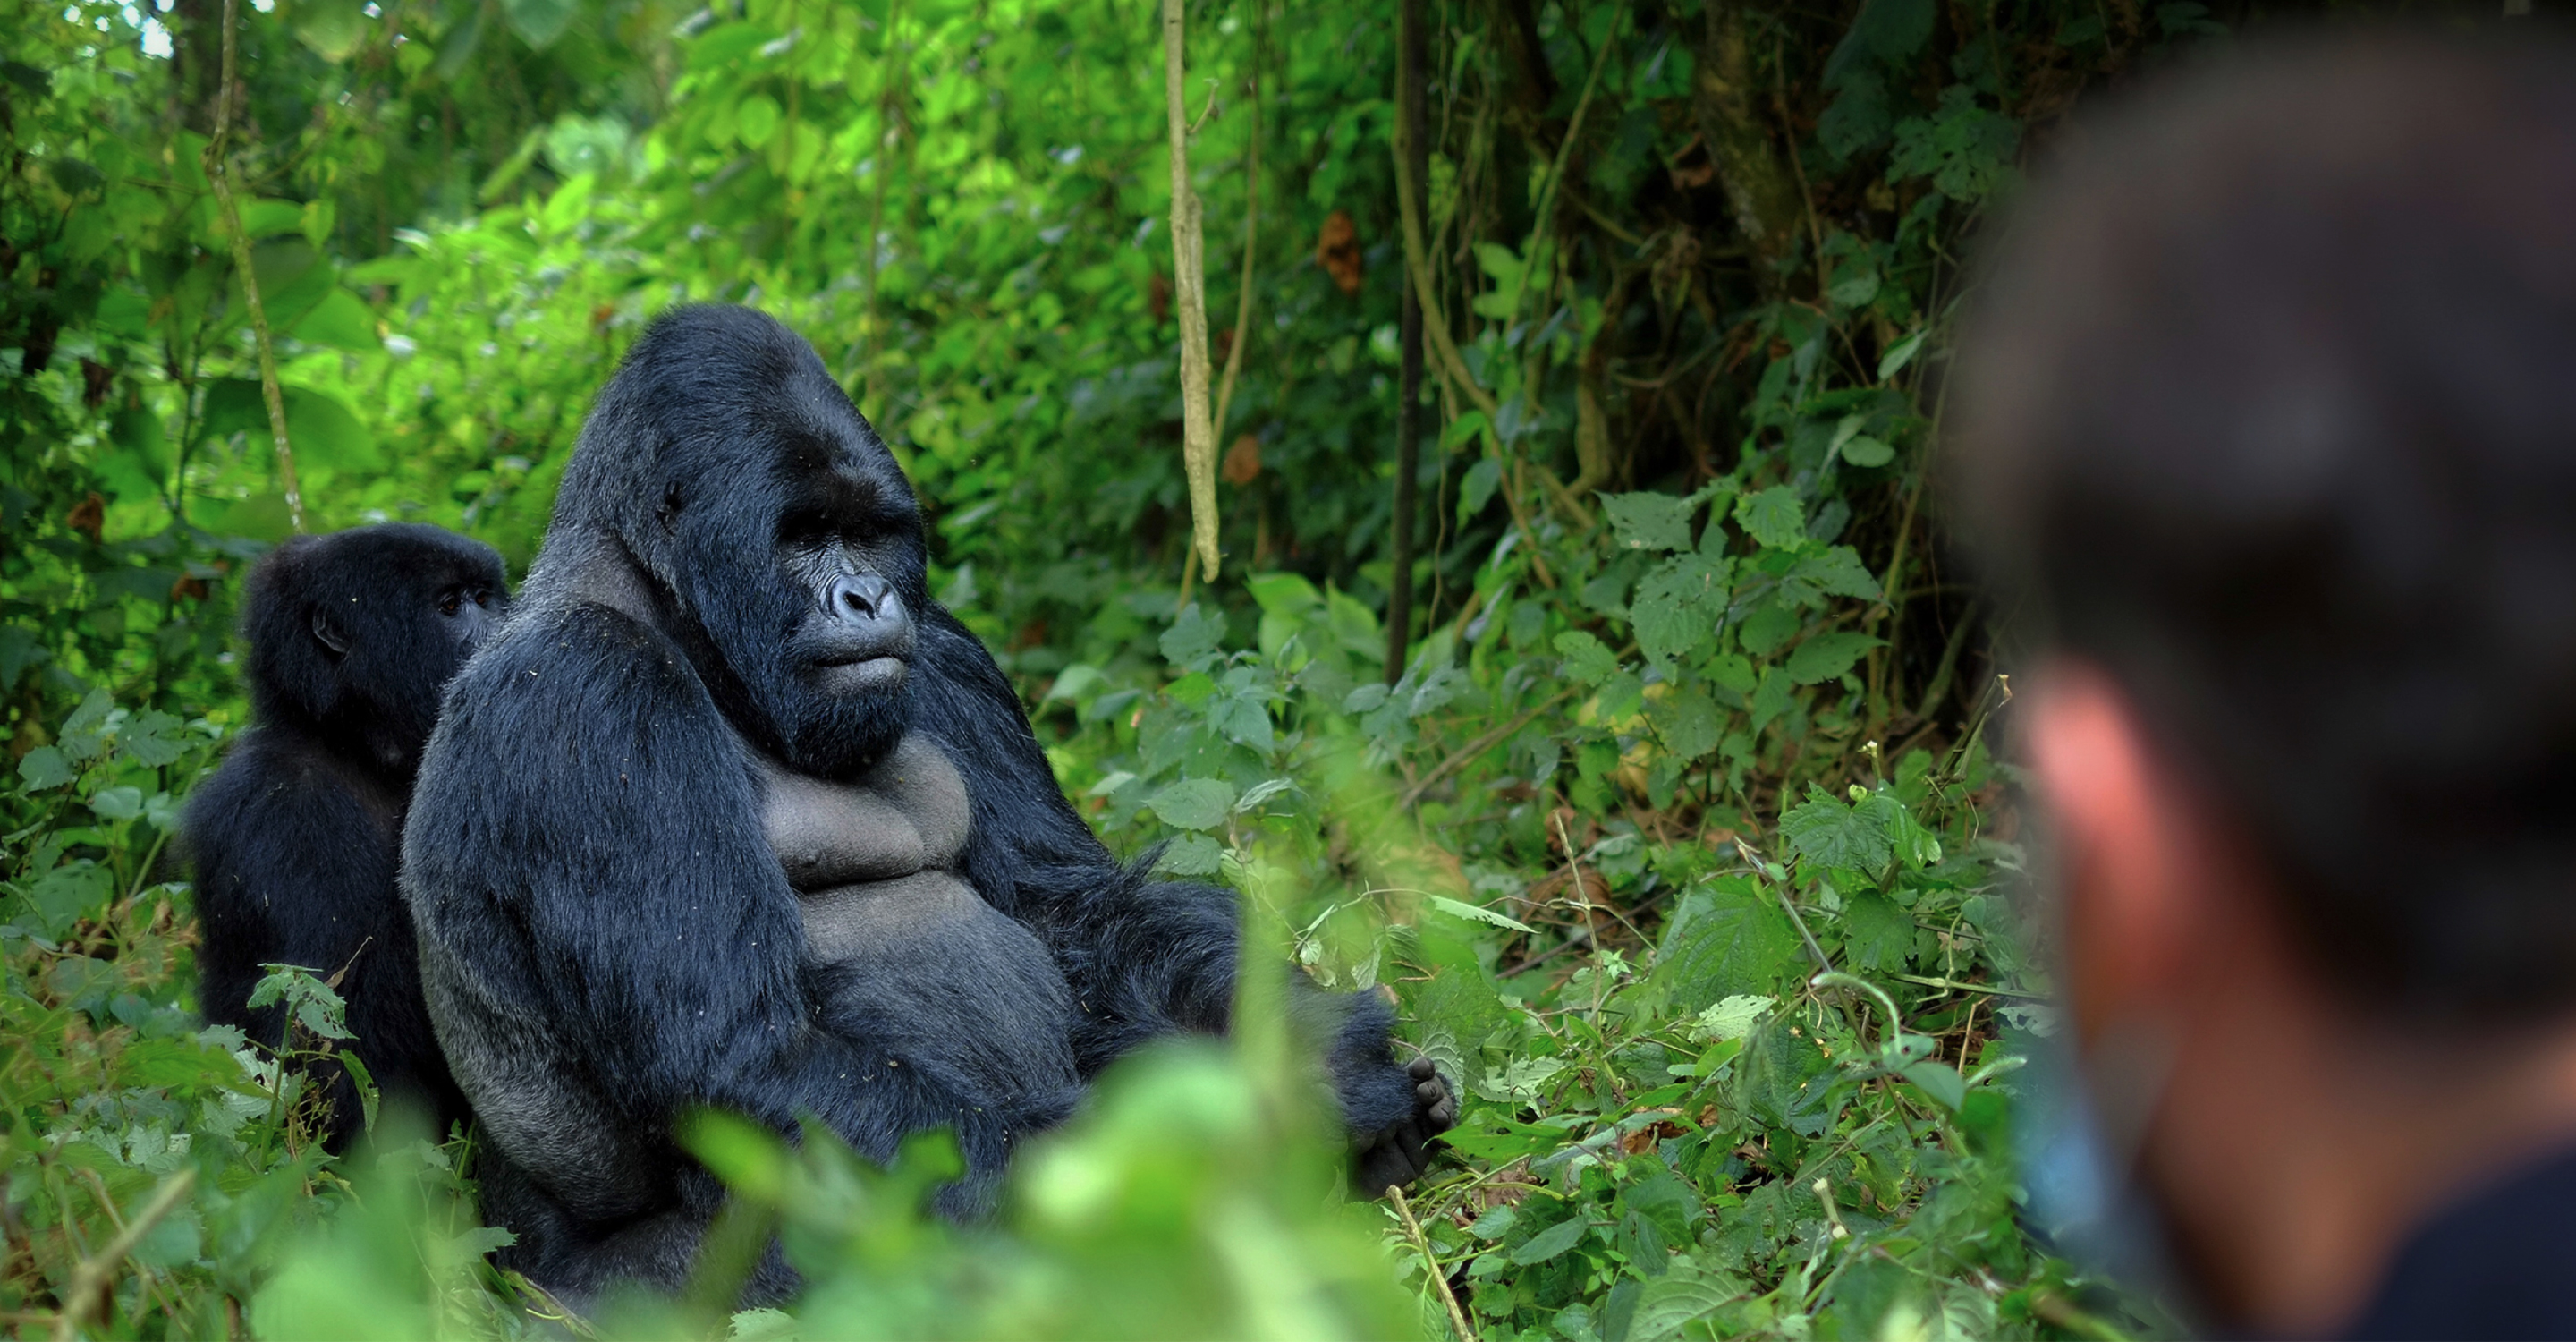 A traveler views a silverback mountain gorilla in Bwindi Impenetrable National Park, Uganda